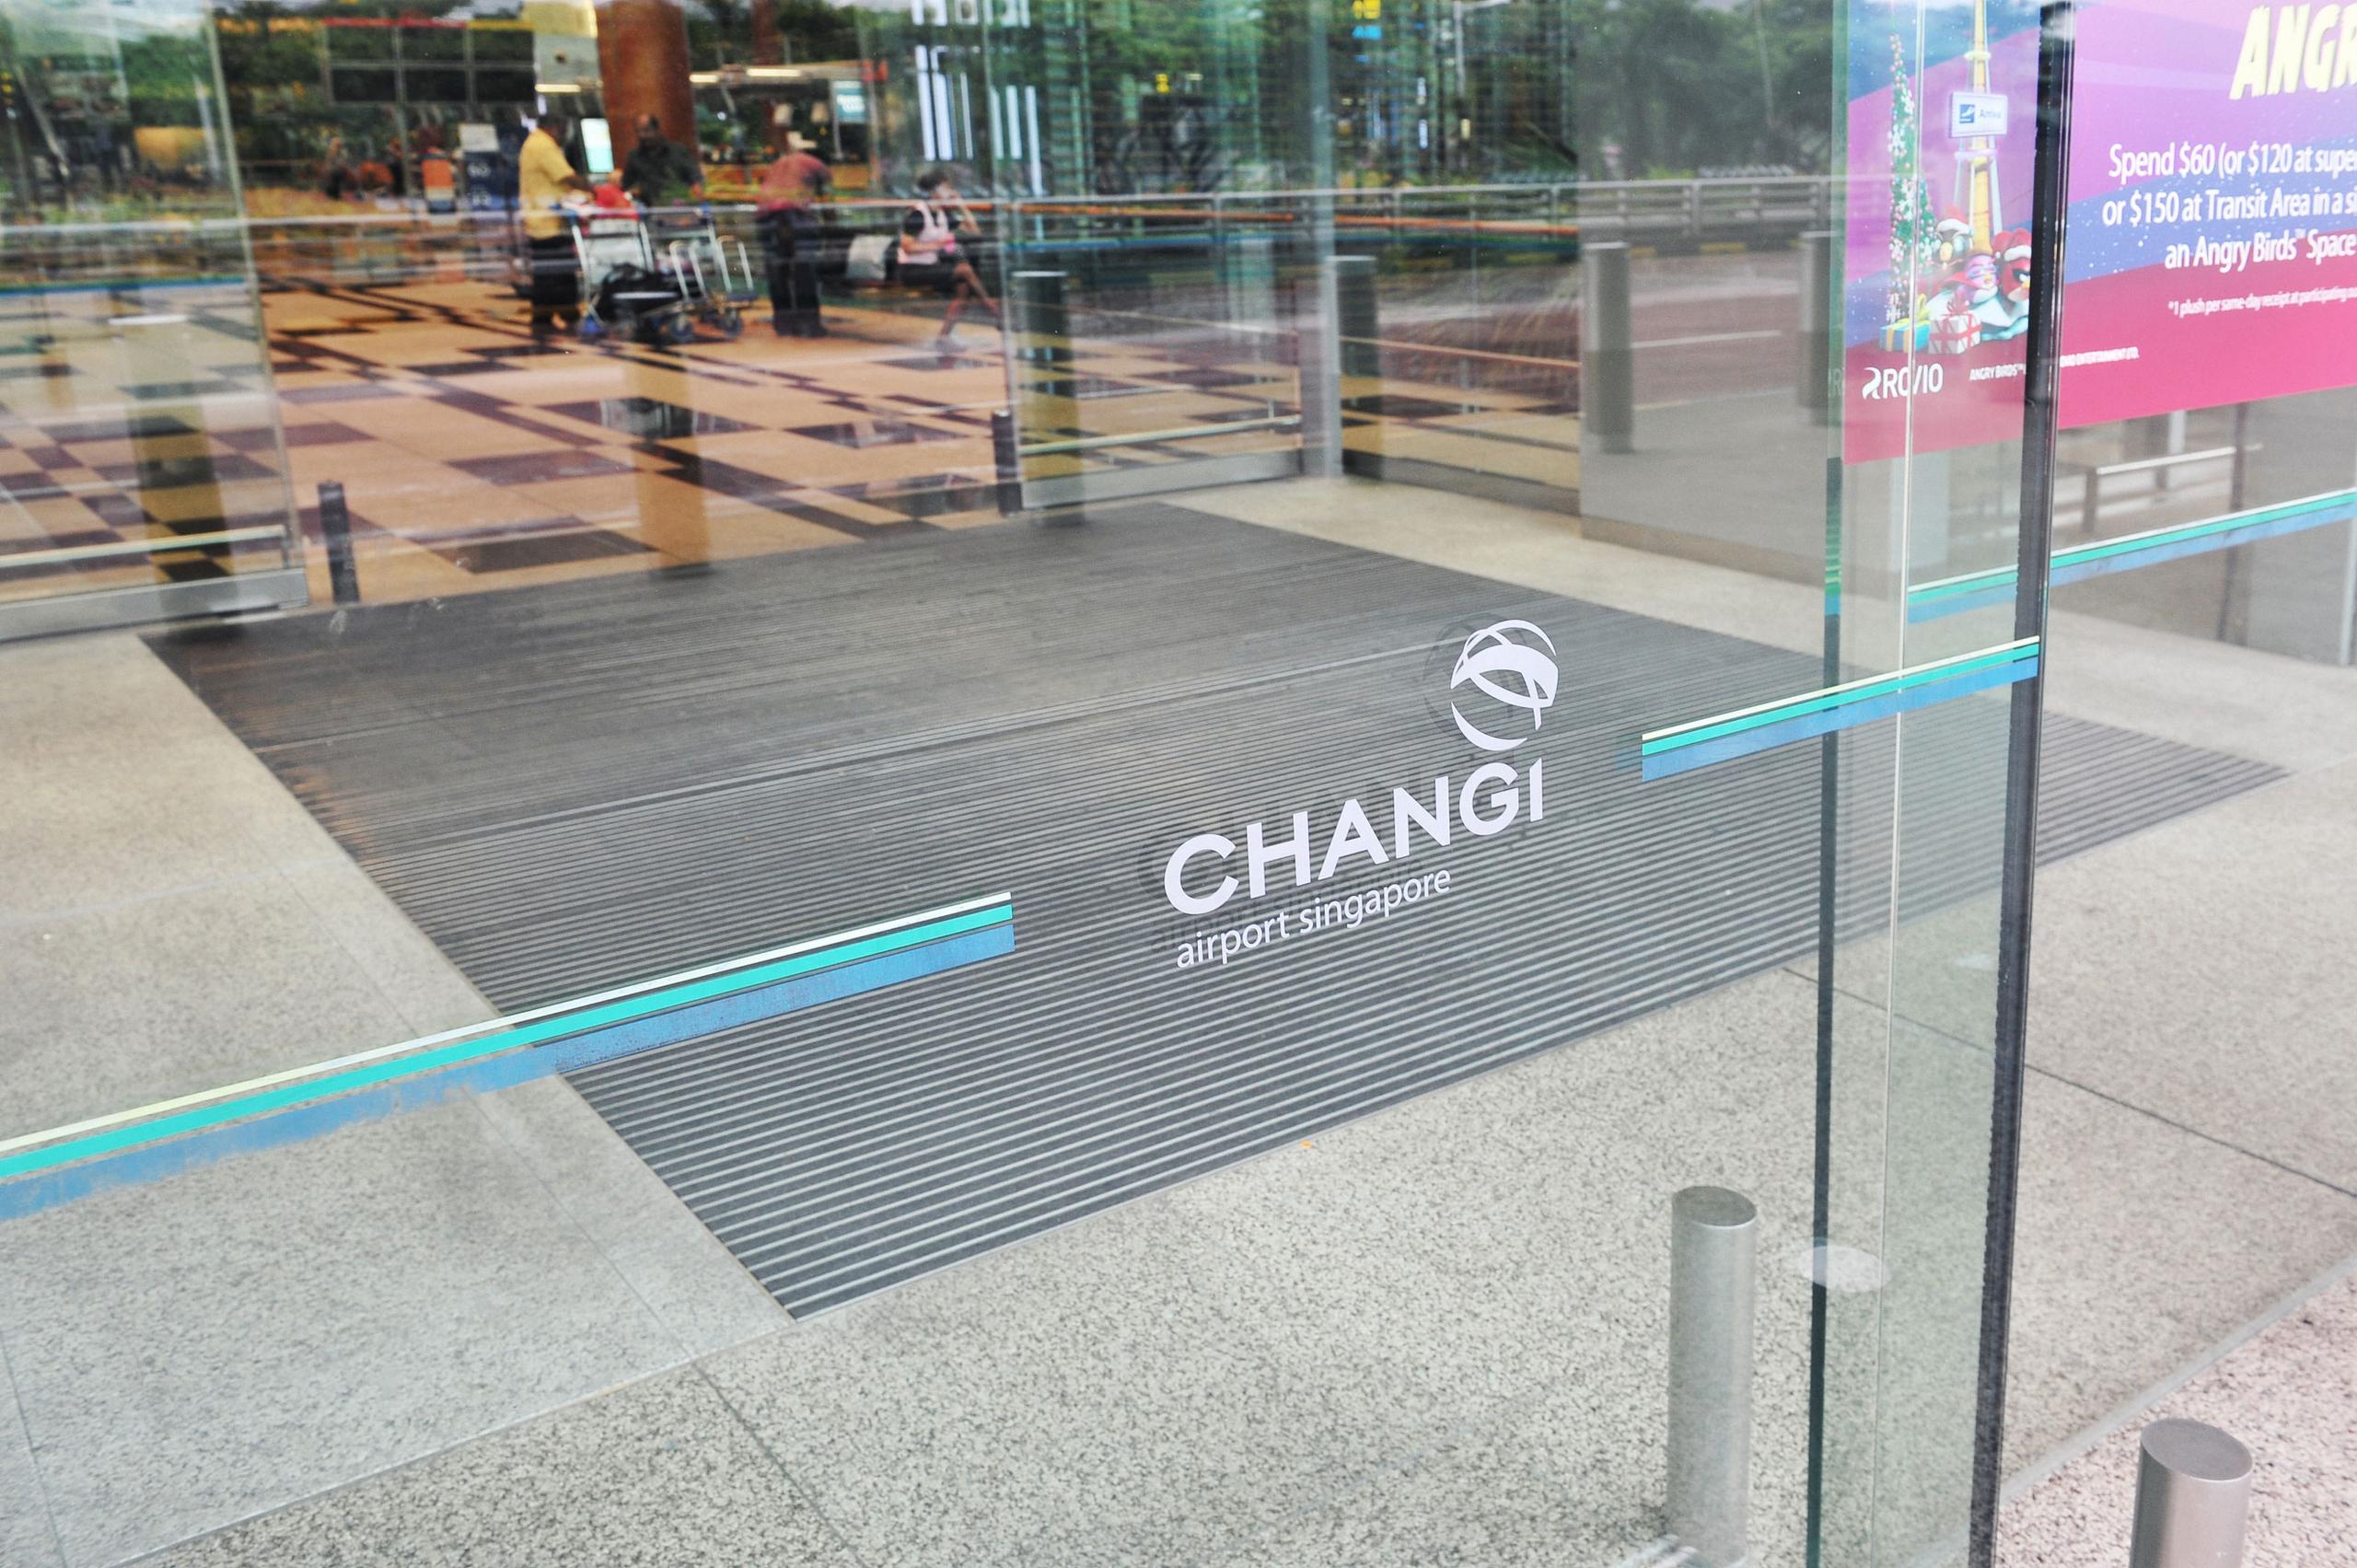 Geggus Changi Airport Singapur